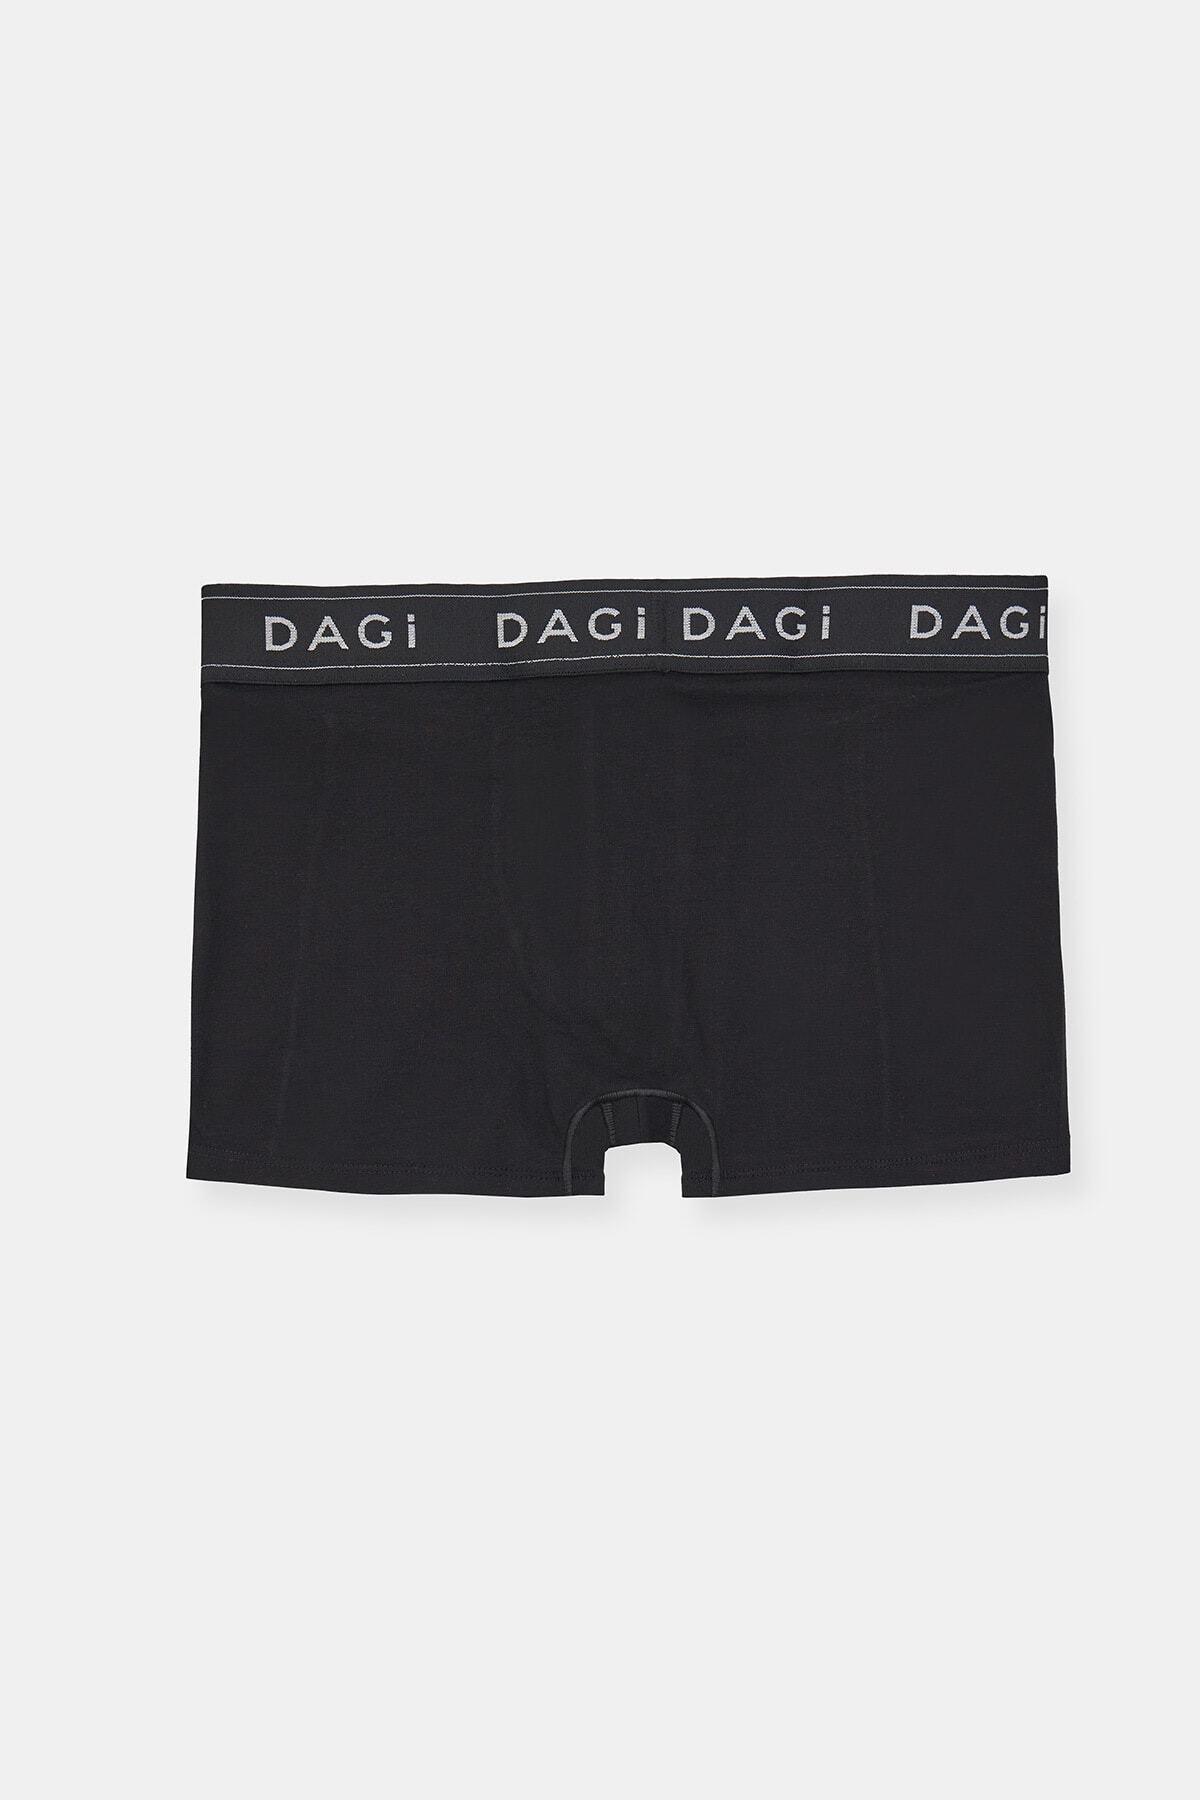 Dagi - Black Straight Boxers